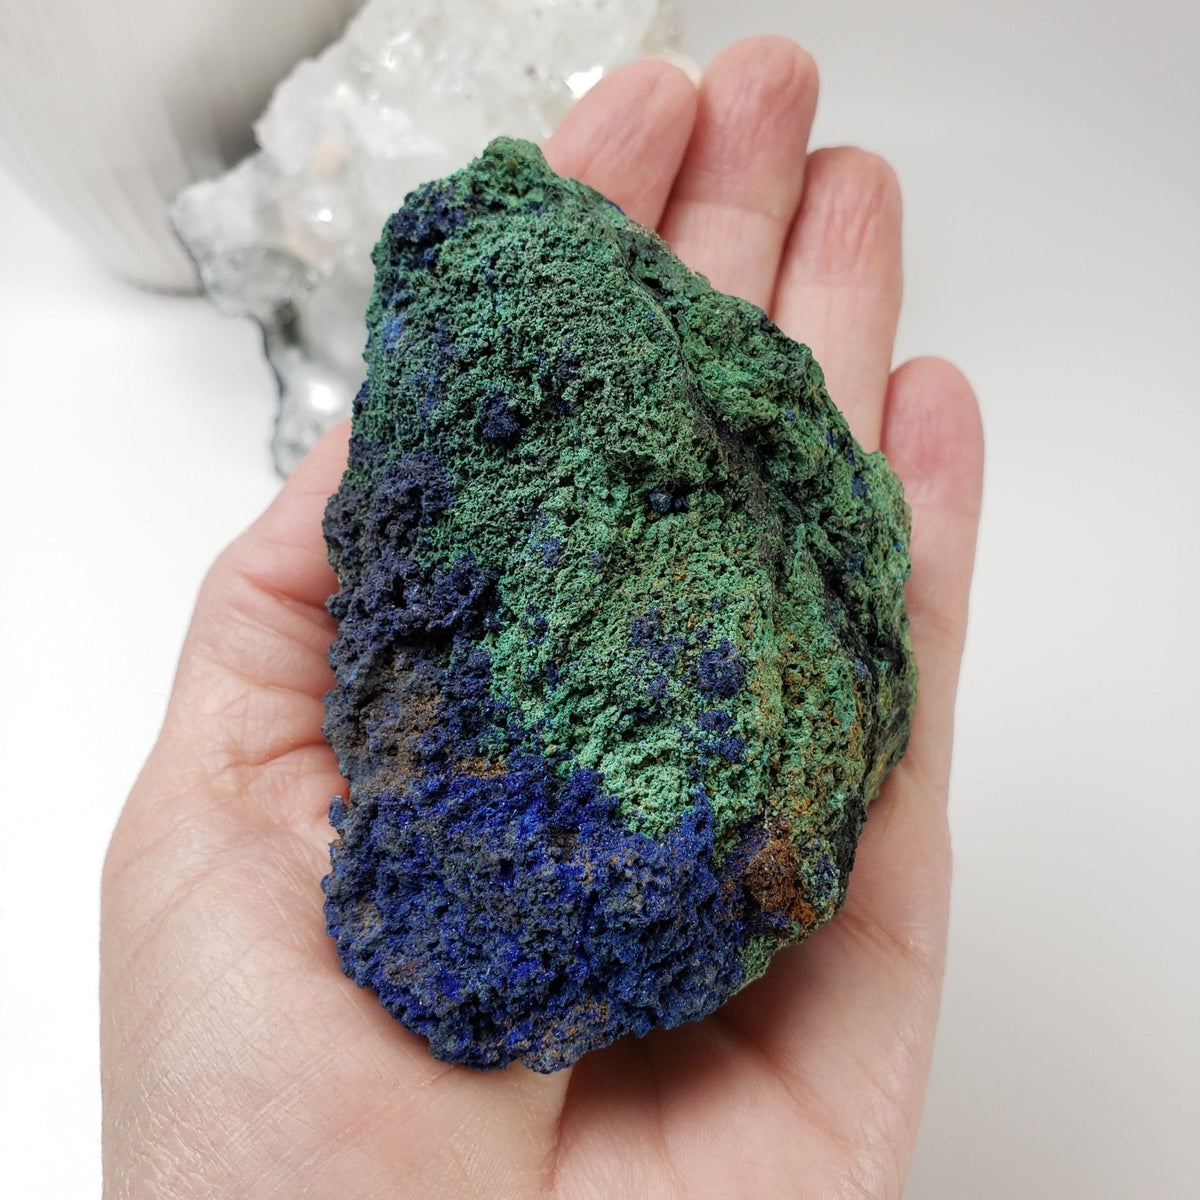 Azurite and Malachite Crystal | 307 grams | Toussit, Morocco